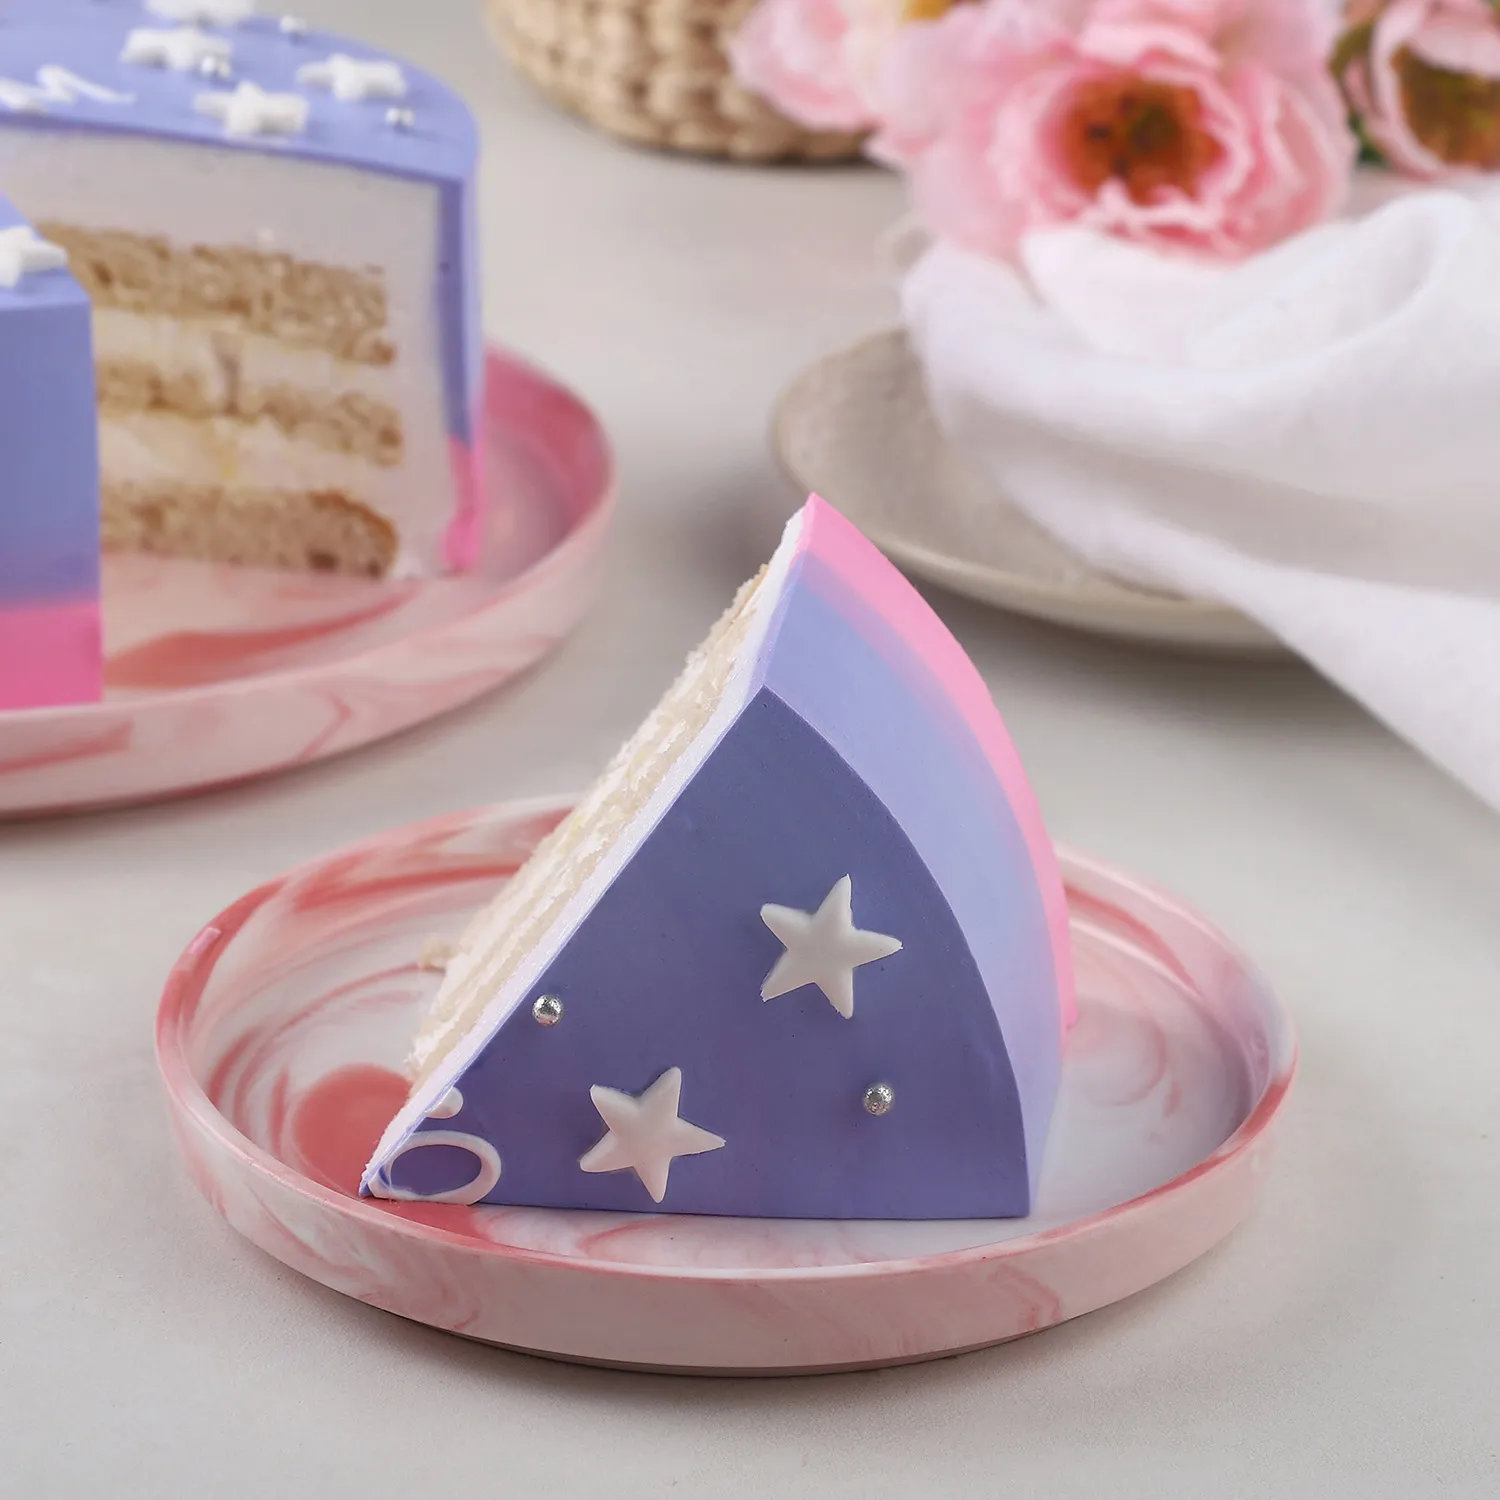 Starry Night Special Mom Cake - 1 KG